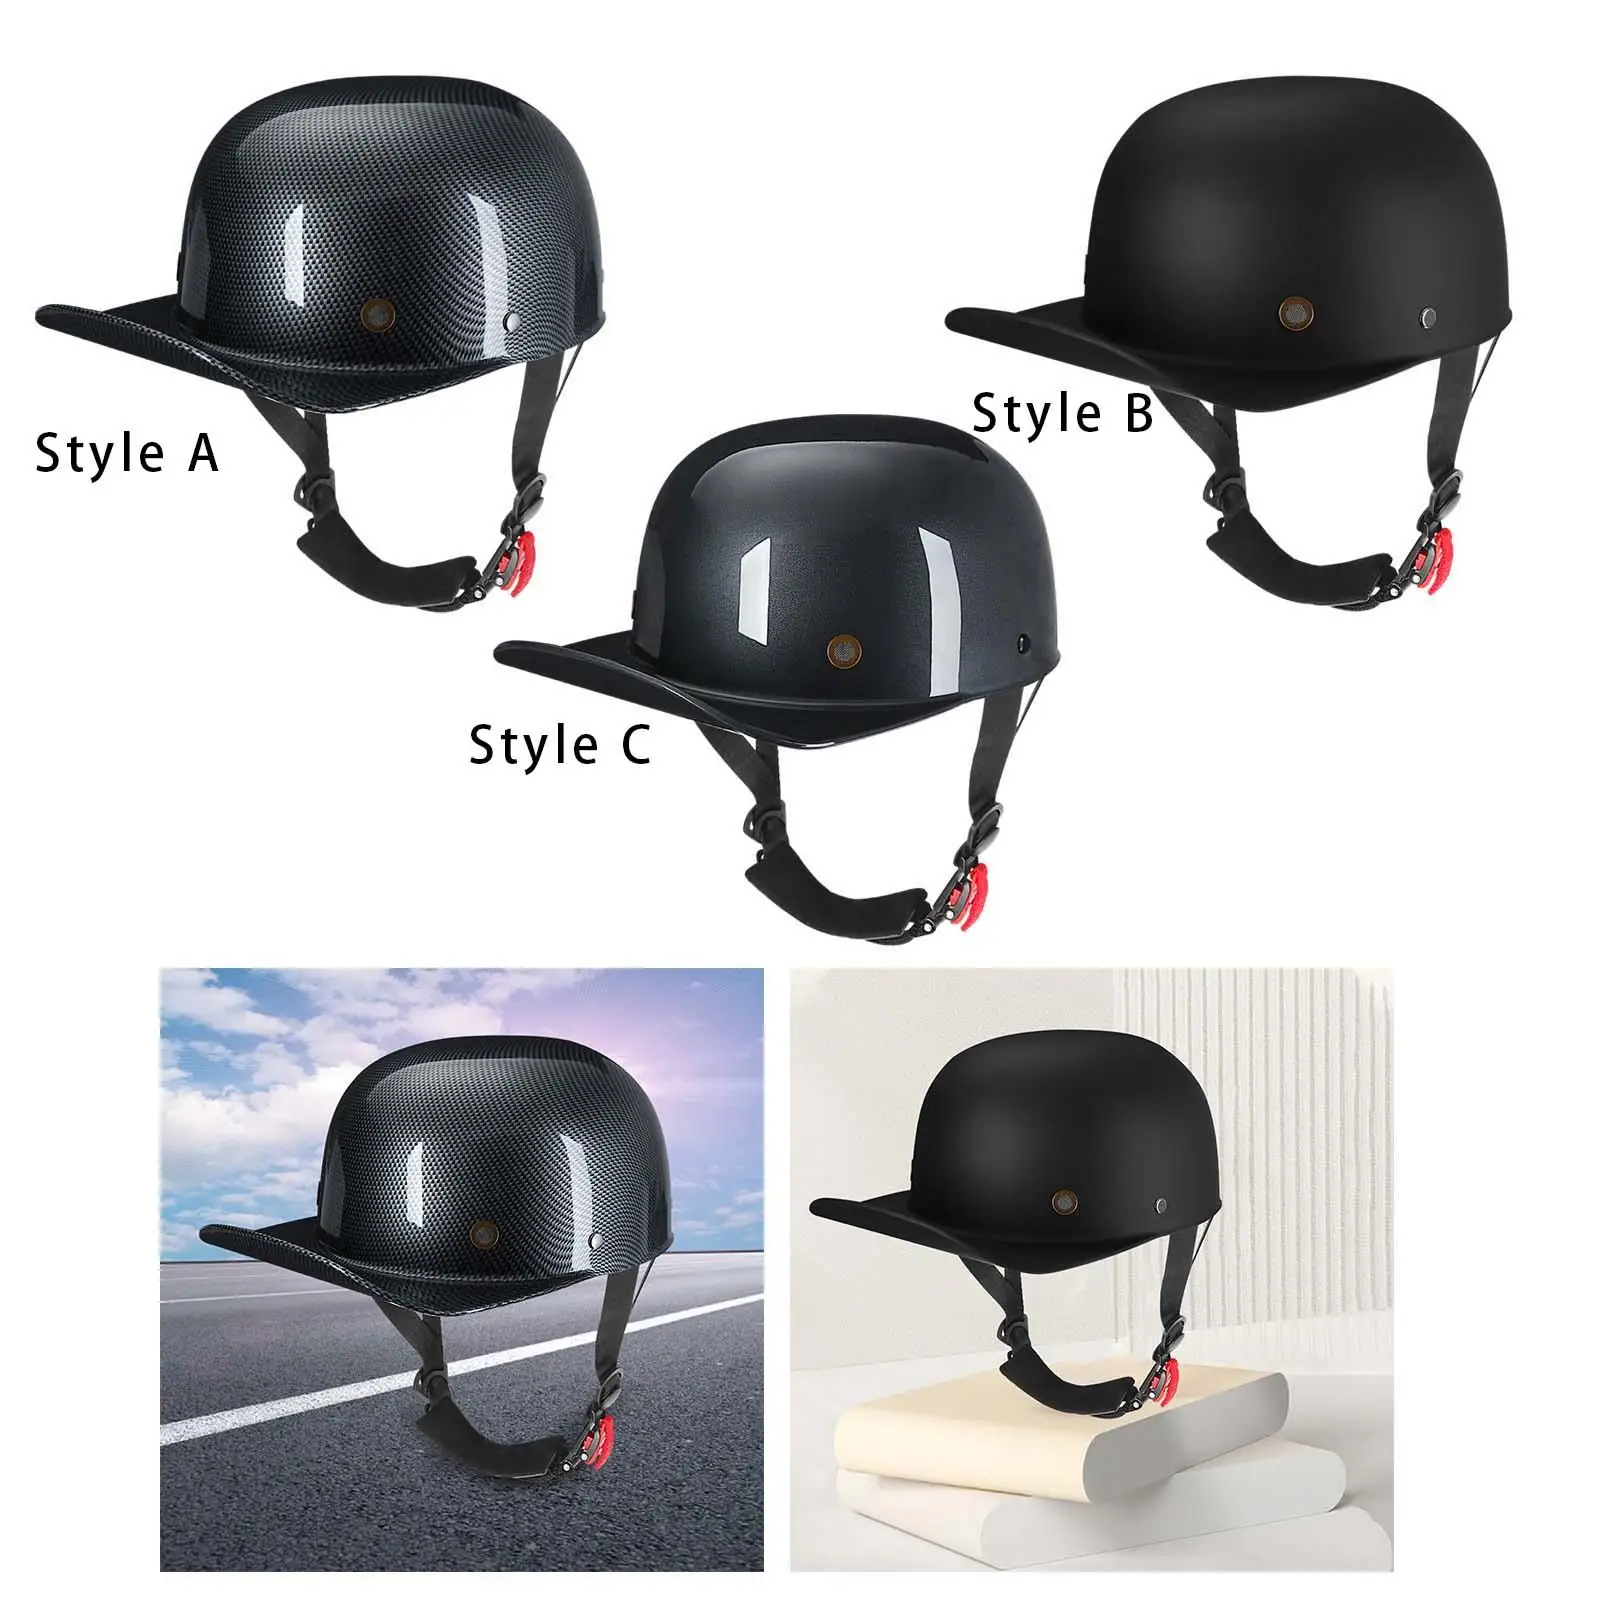 Retro Motorcycle Helmet Open Face Quick Release Strap for ATV Bike